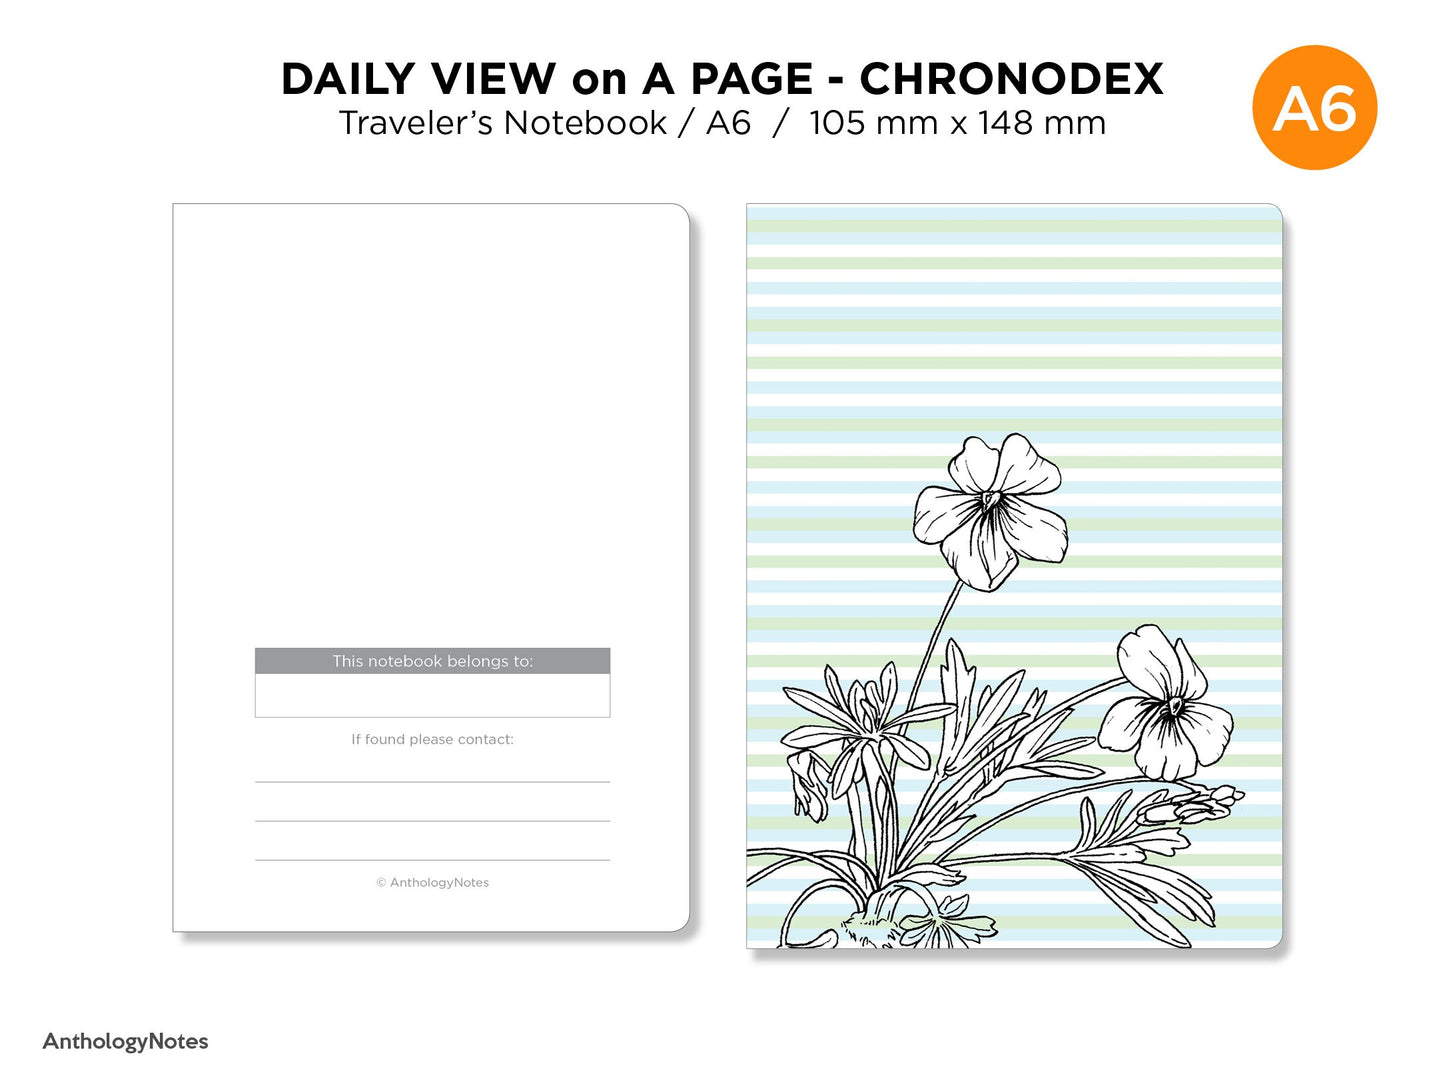 TN A6 CHRONODEX Grid Daily View Printable Traveler's Notebook Insert